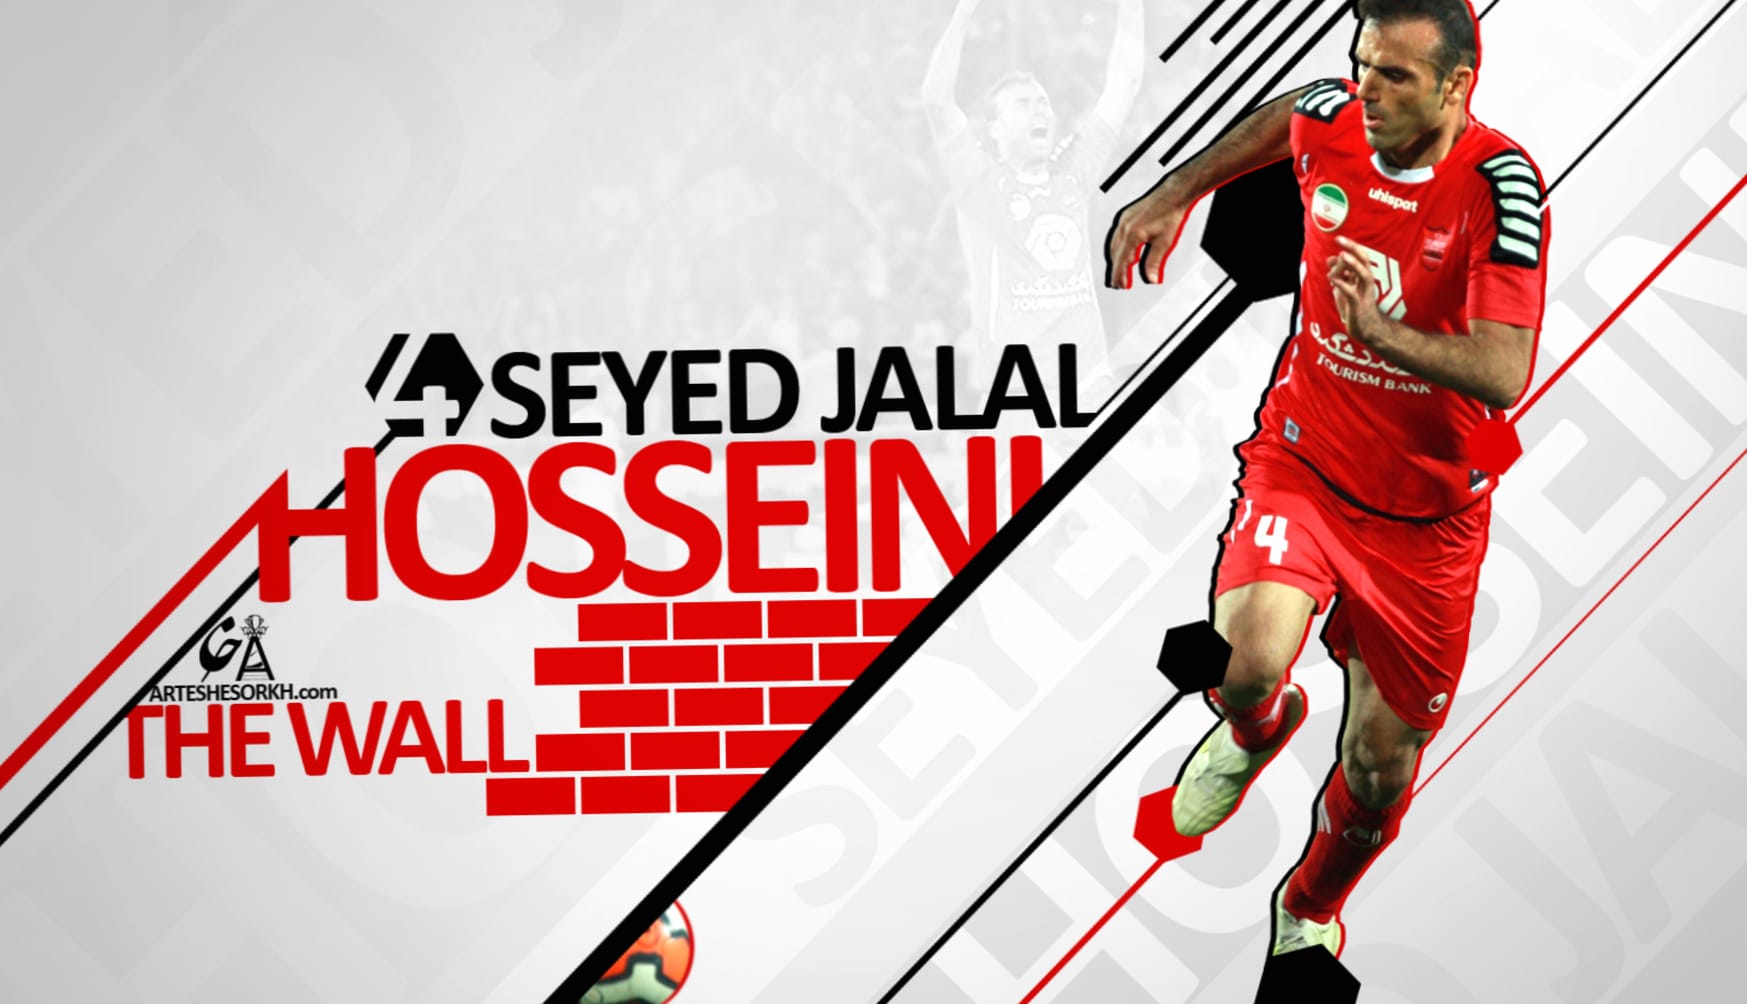 Seyyed Jalal Hosseini at 1024 x 1024 iPad size wallpapers HD quality